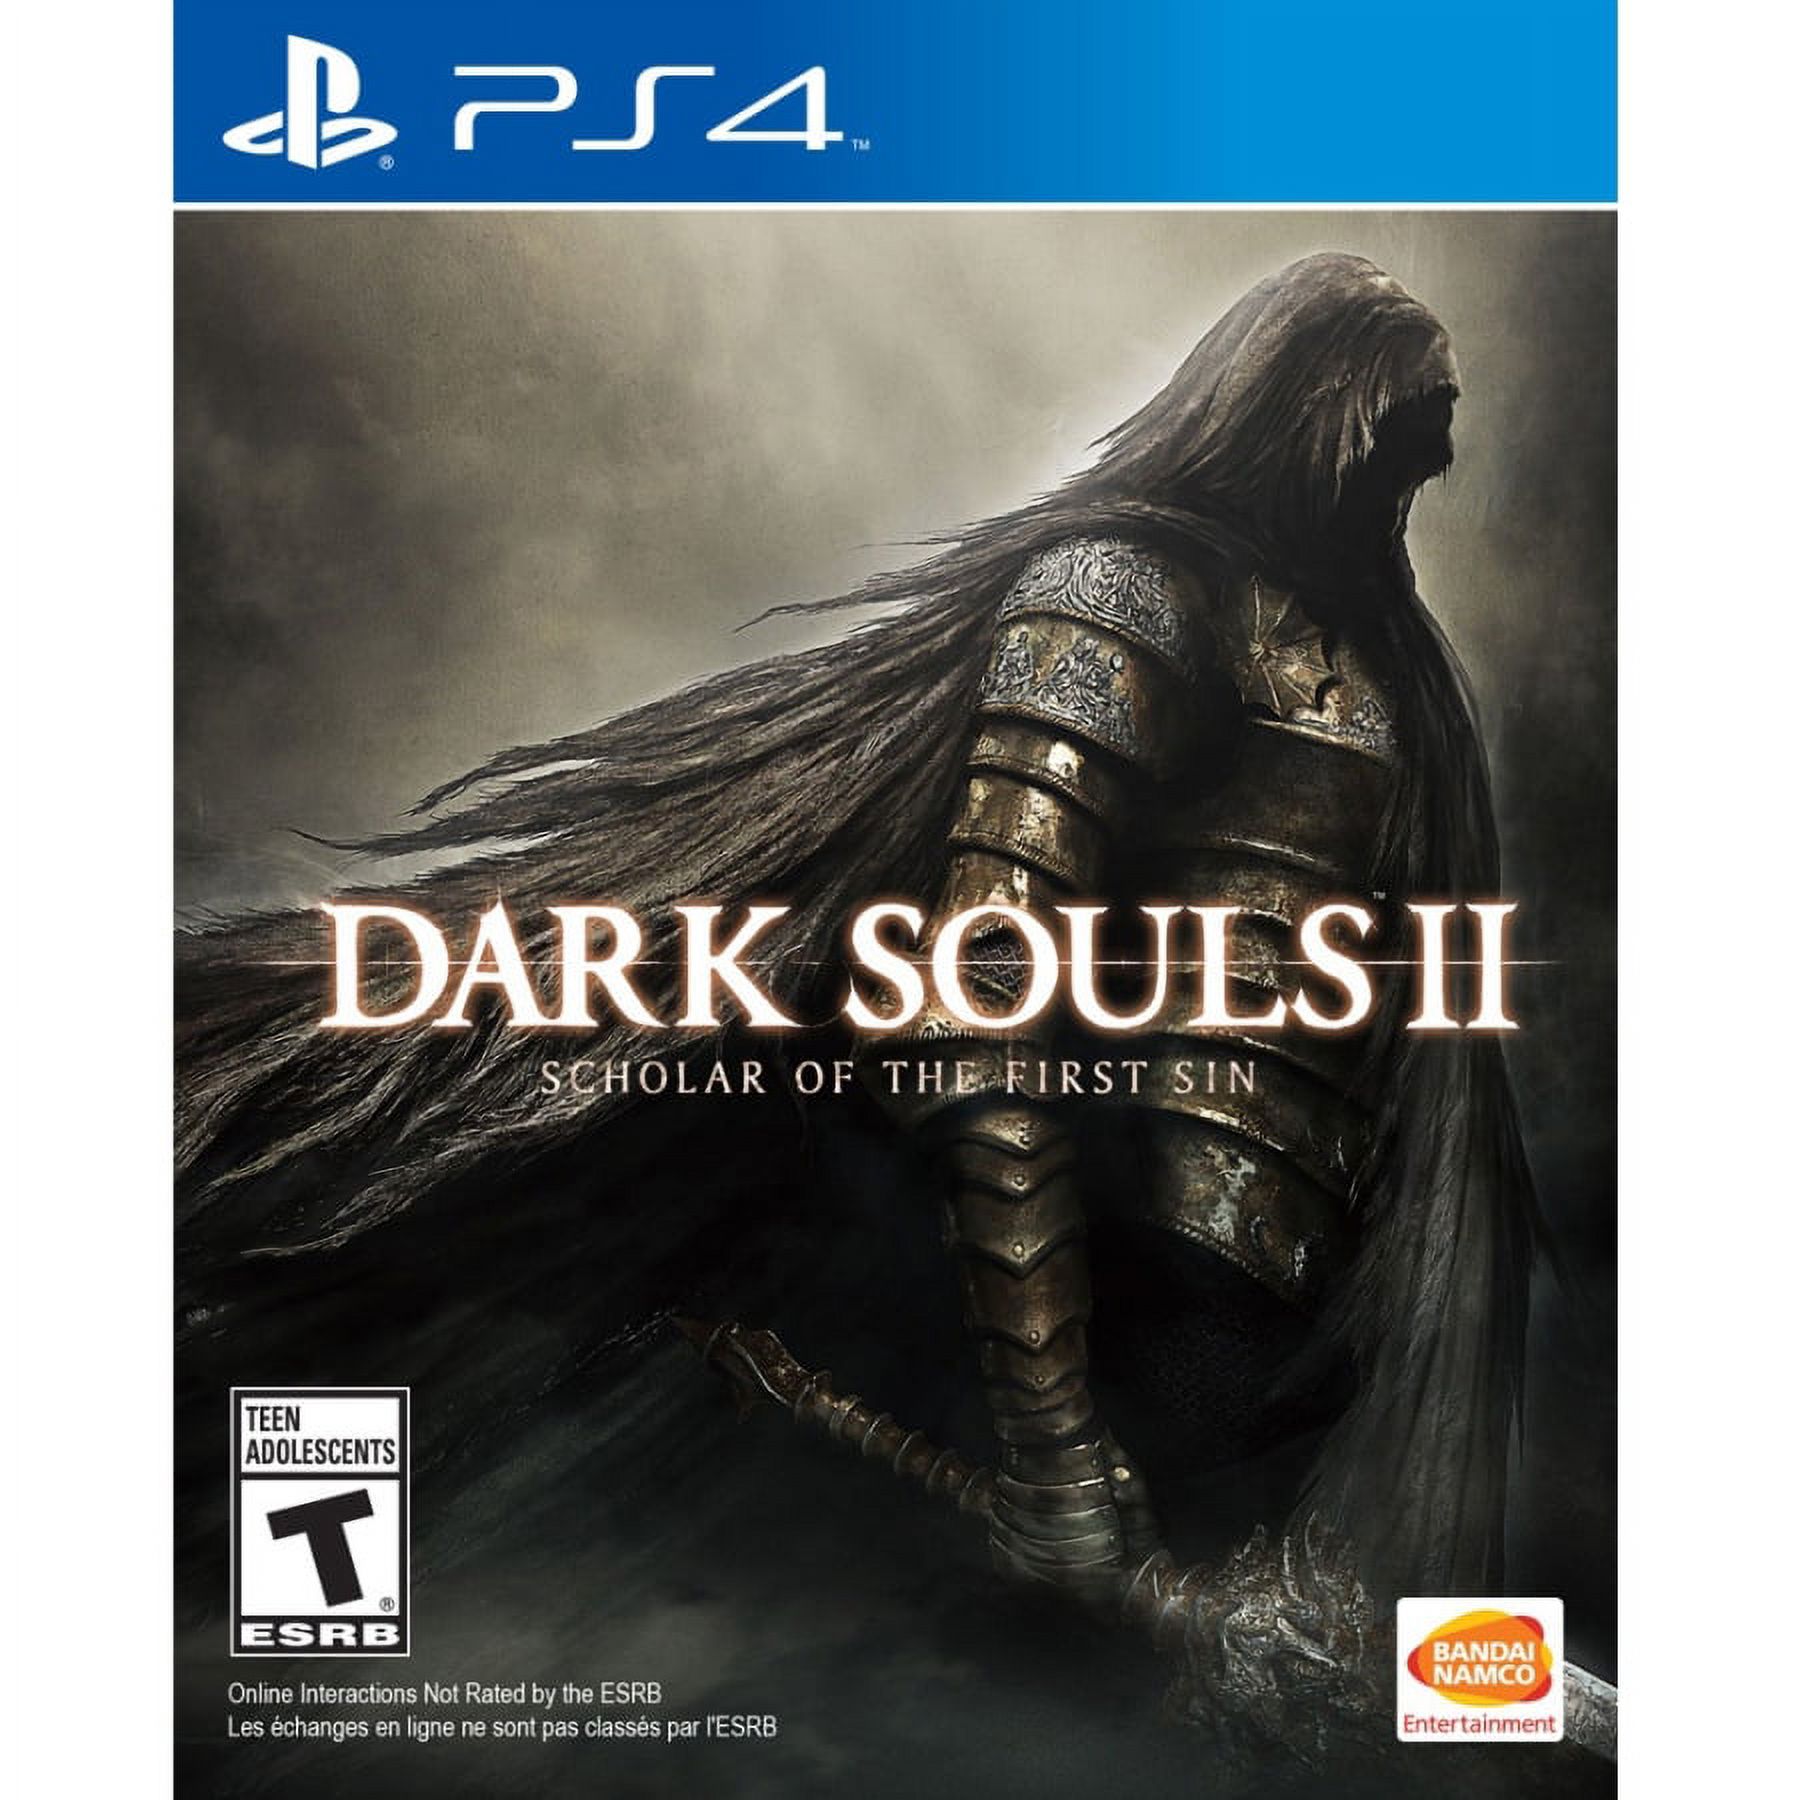 Dark Souls 2 Scholar of the First Sin, Bandai Namco, PlayStation 4, 722674120272 - image 1 of 6